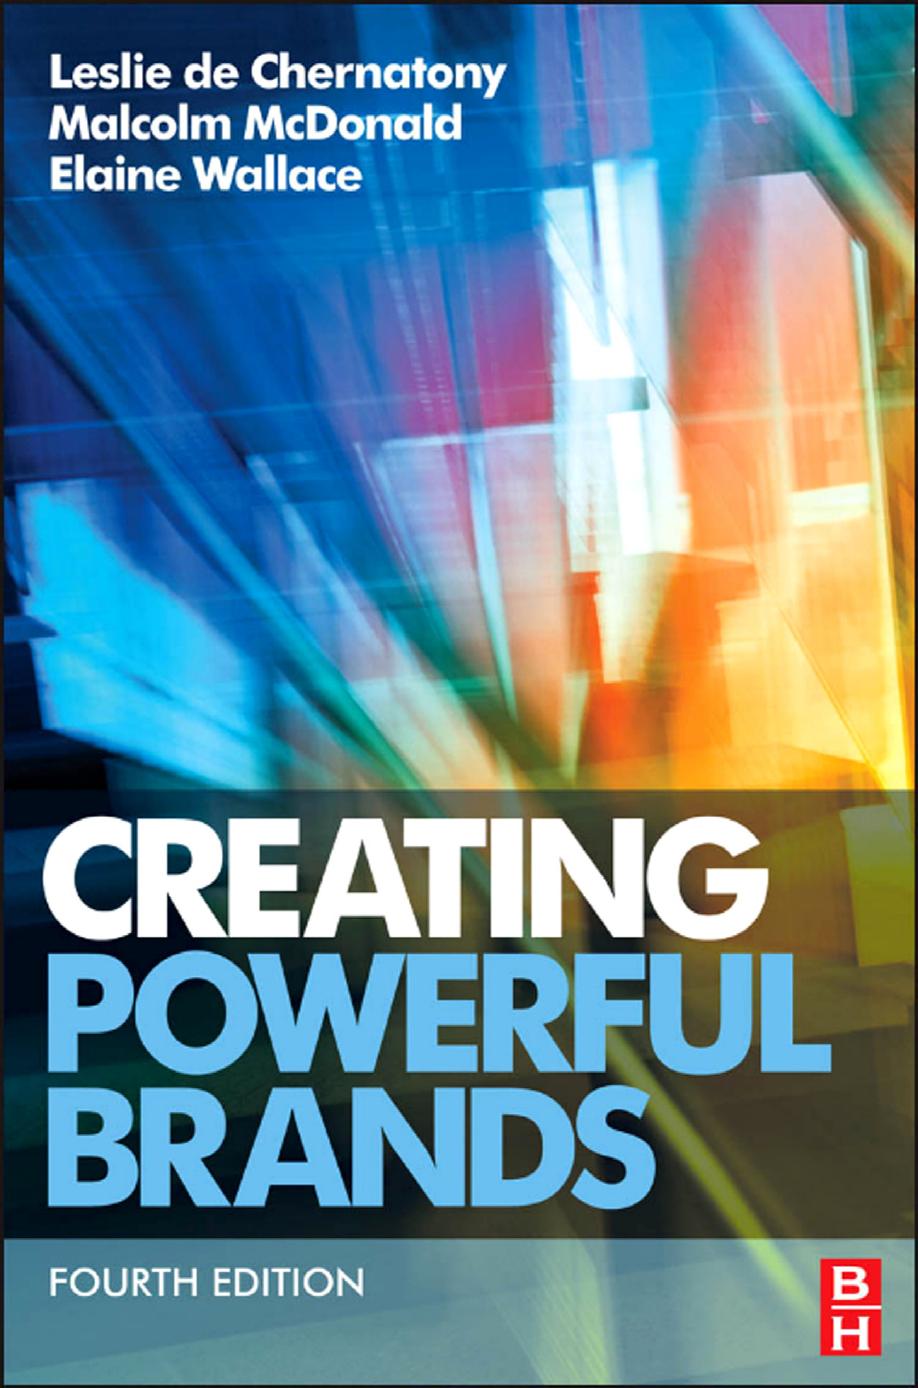 Leslie de Chernatony, Malcolm McDonald, Elaine Wallace Creating Powerful Brands, Fourth Edition 2010